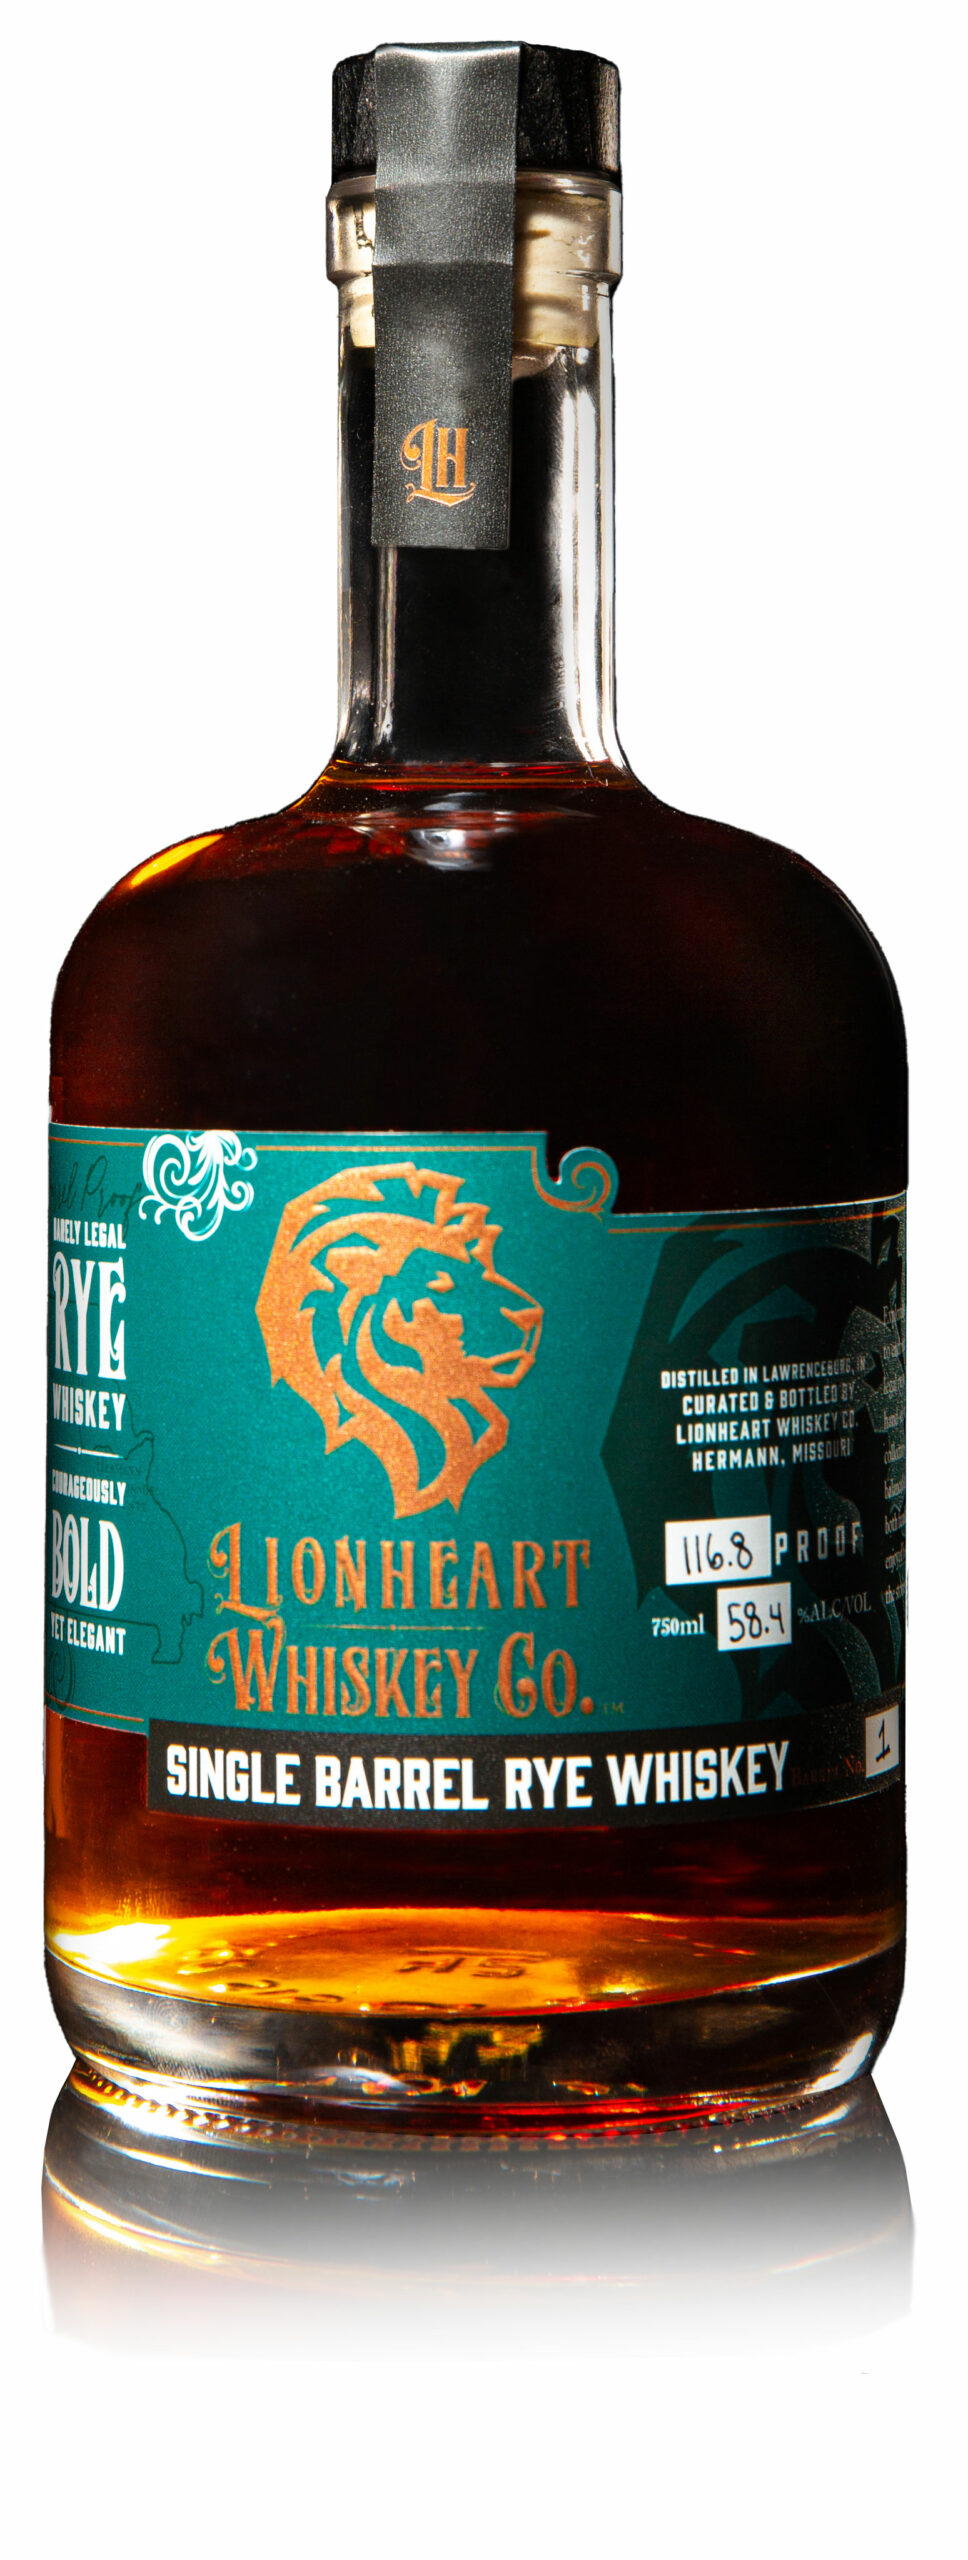 Bottle of Lionheart Whiskey Co. Small Batch Rye Whiskey